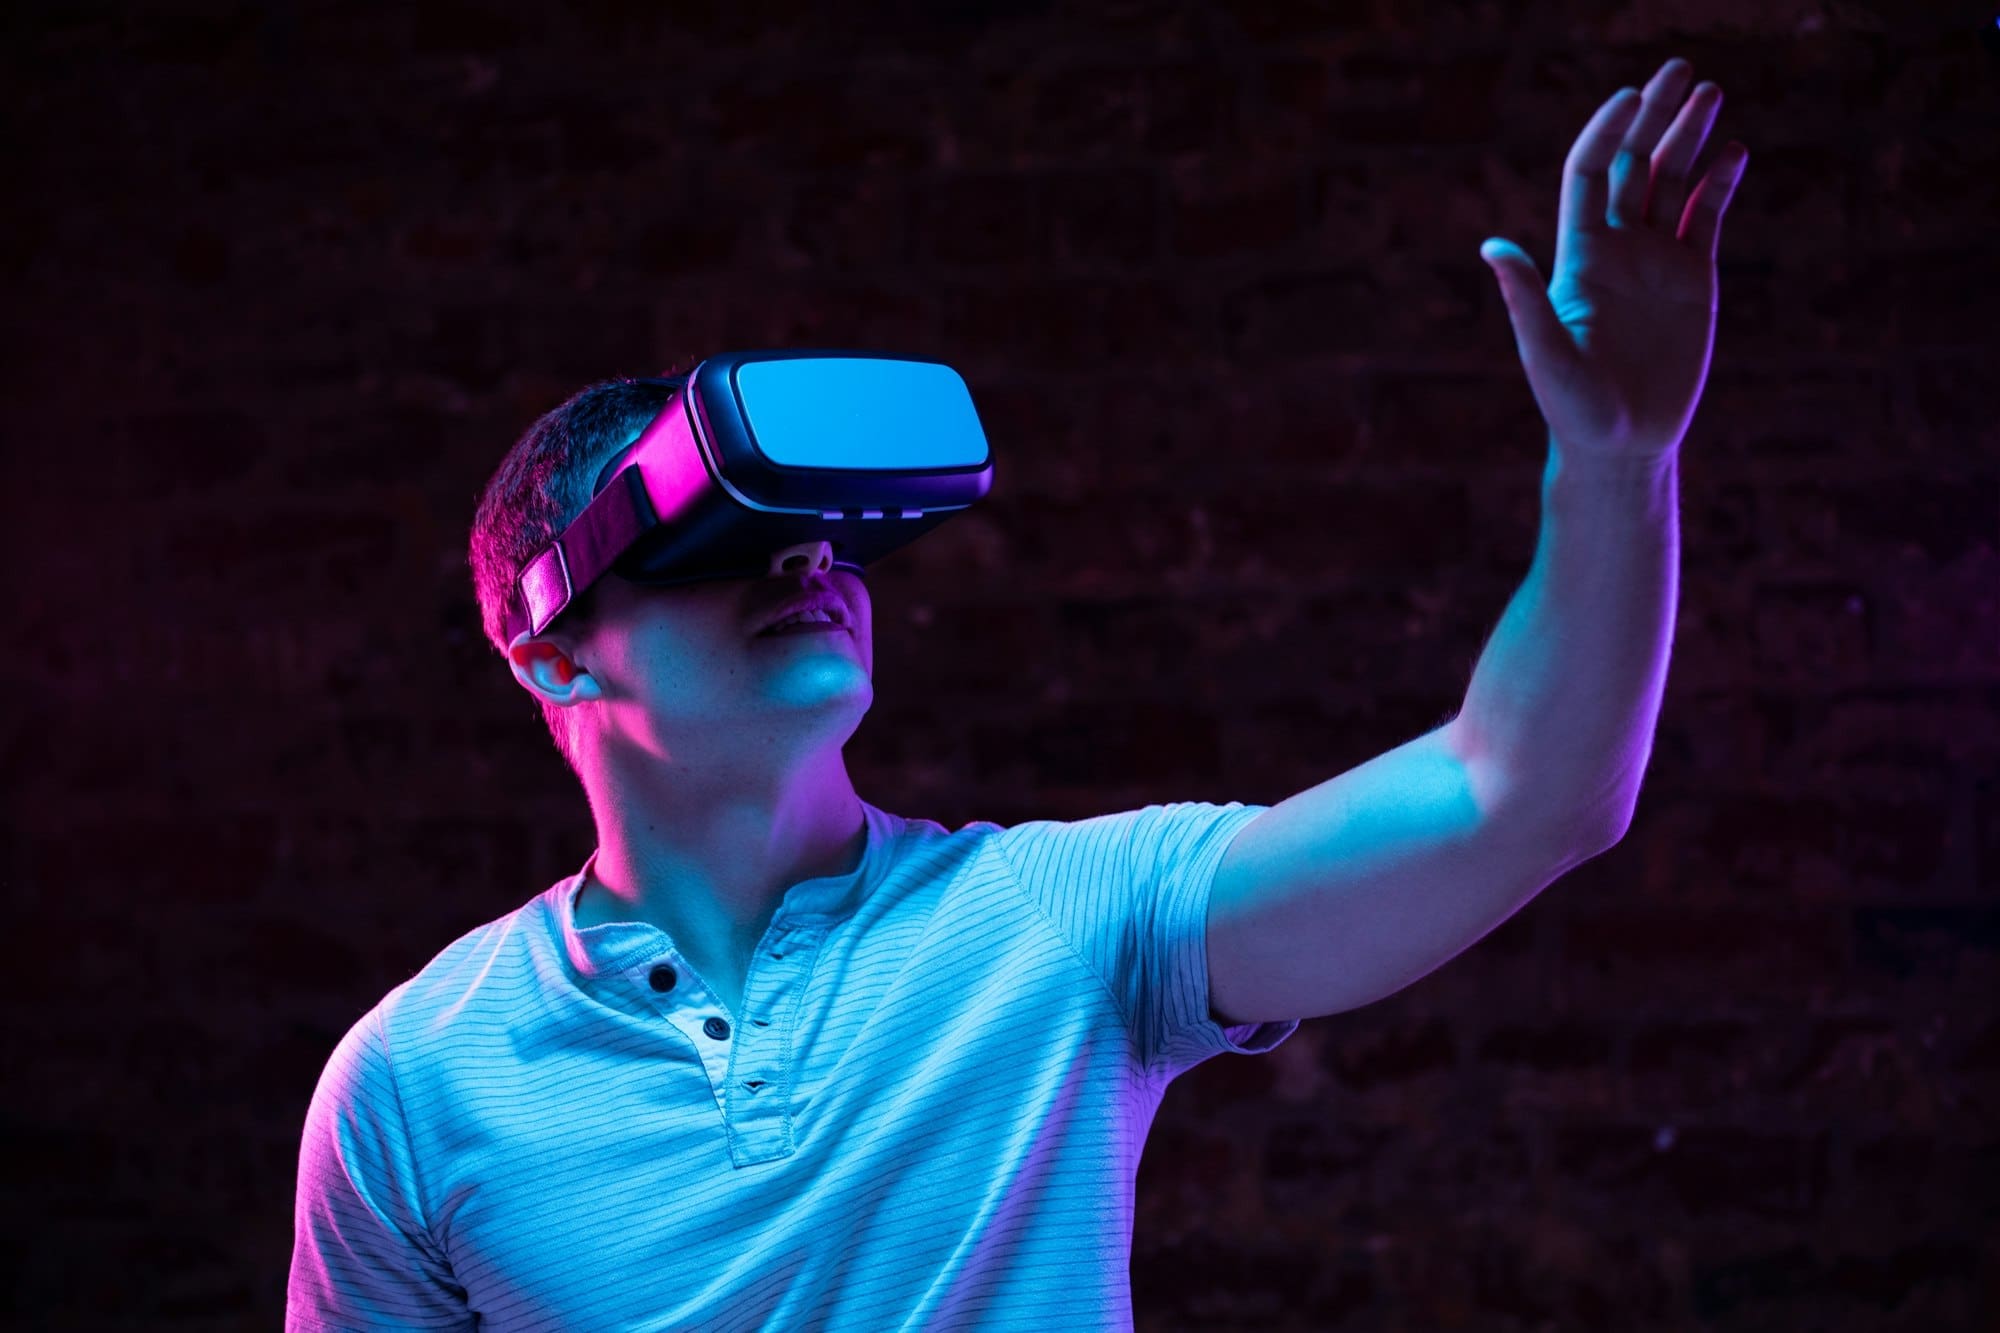 Caucasian man holding a Virtual Reality headset